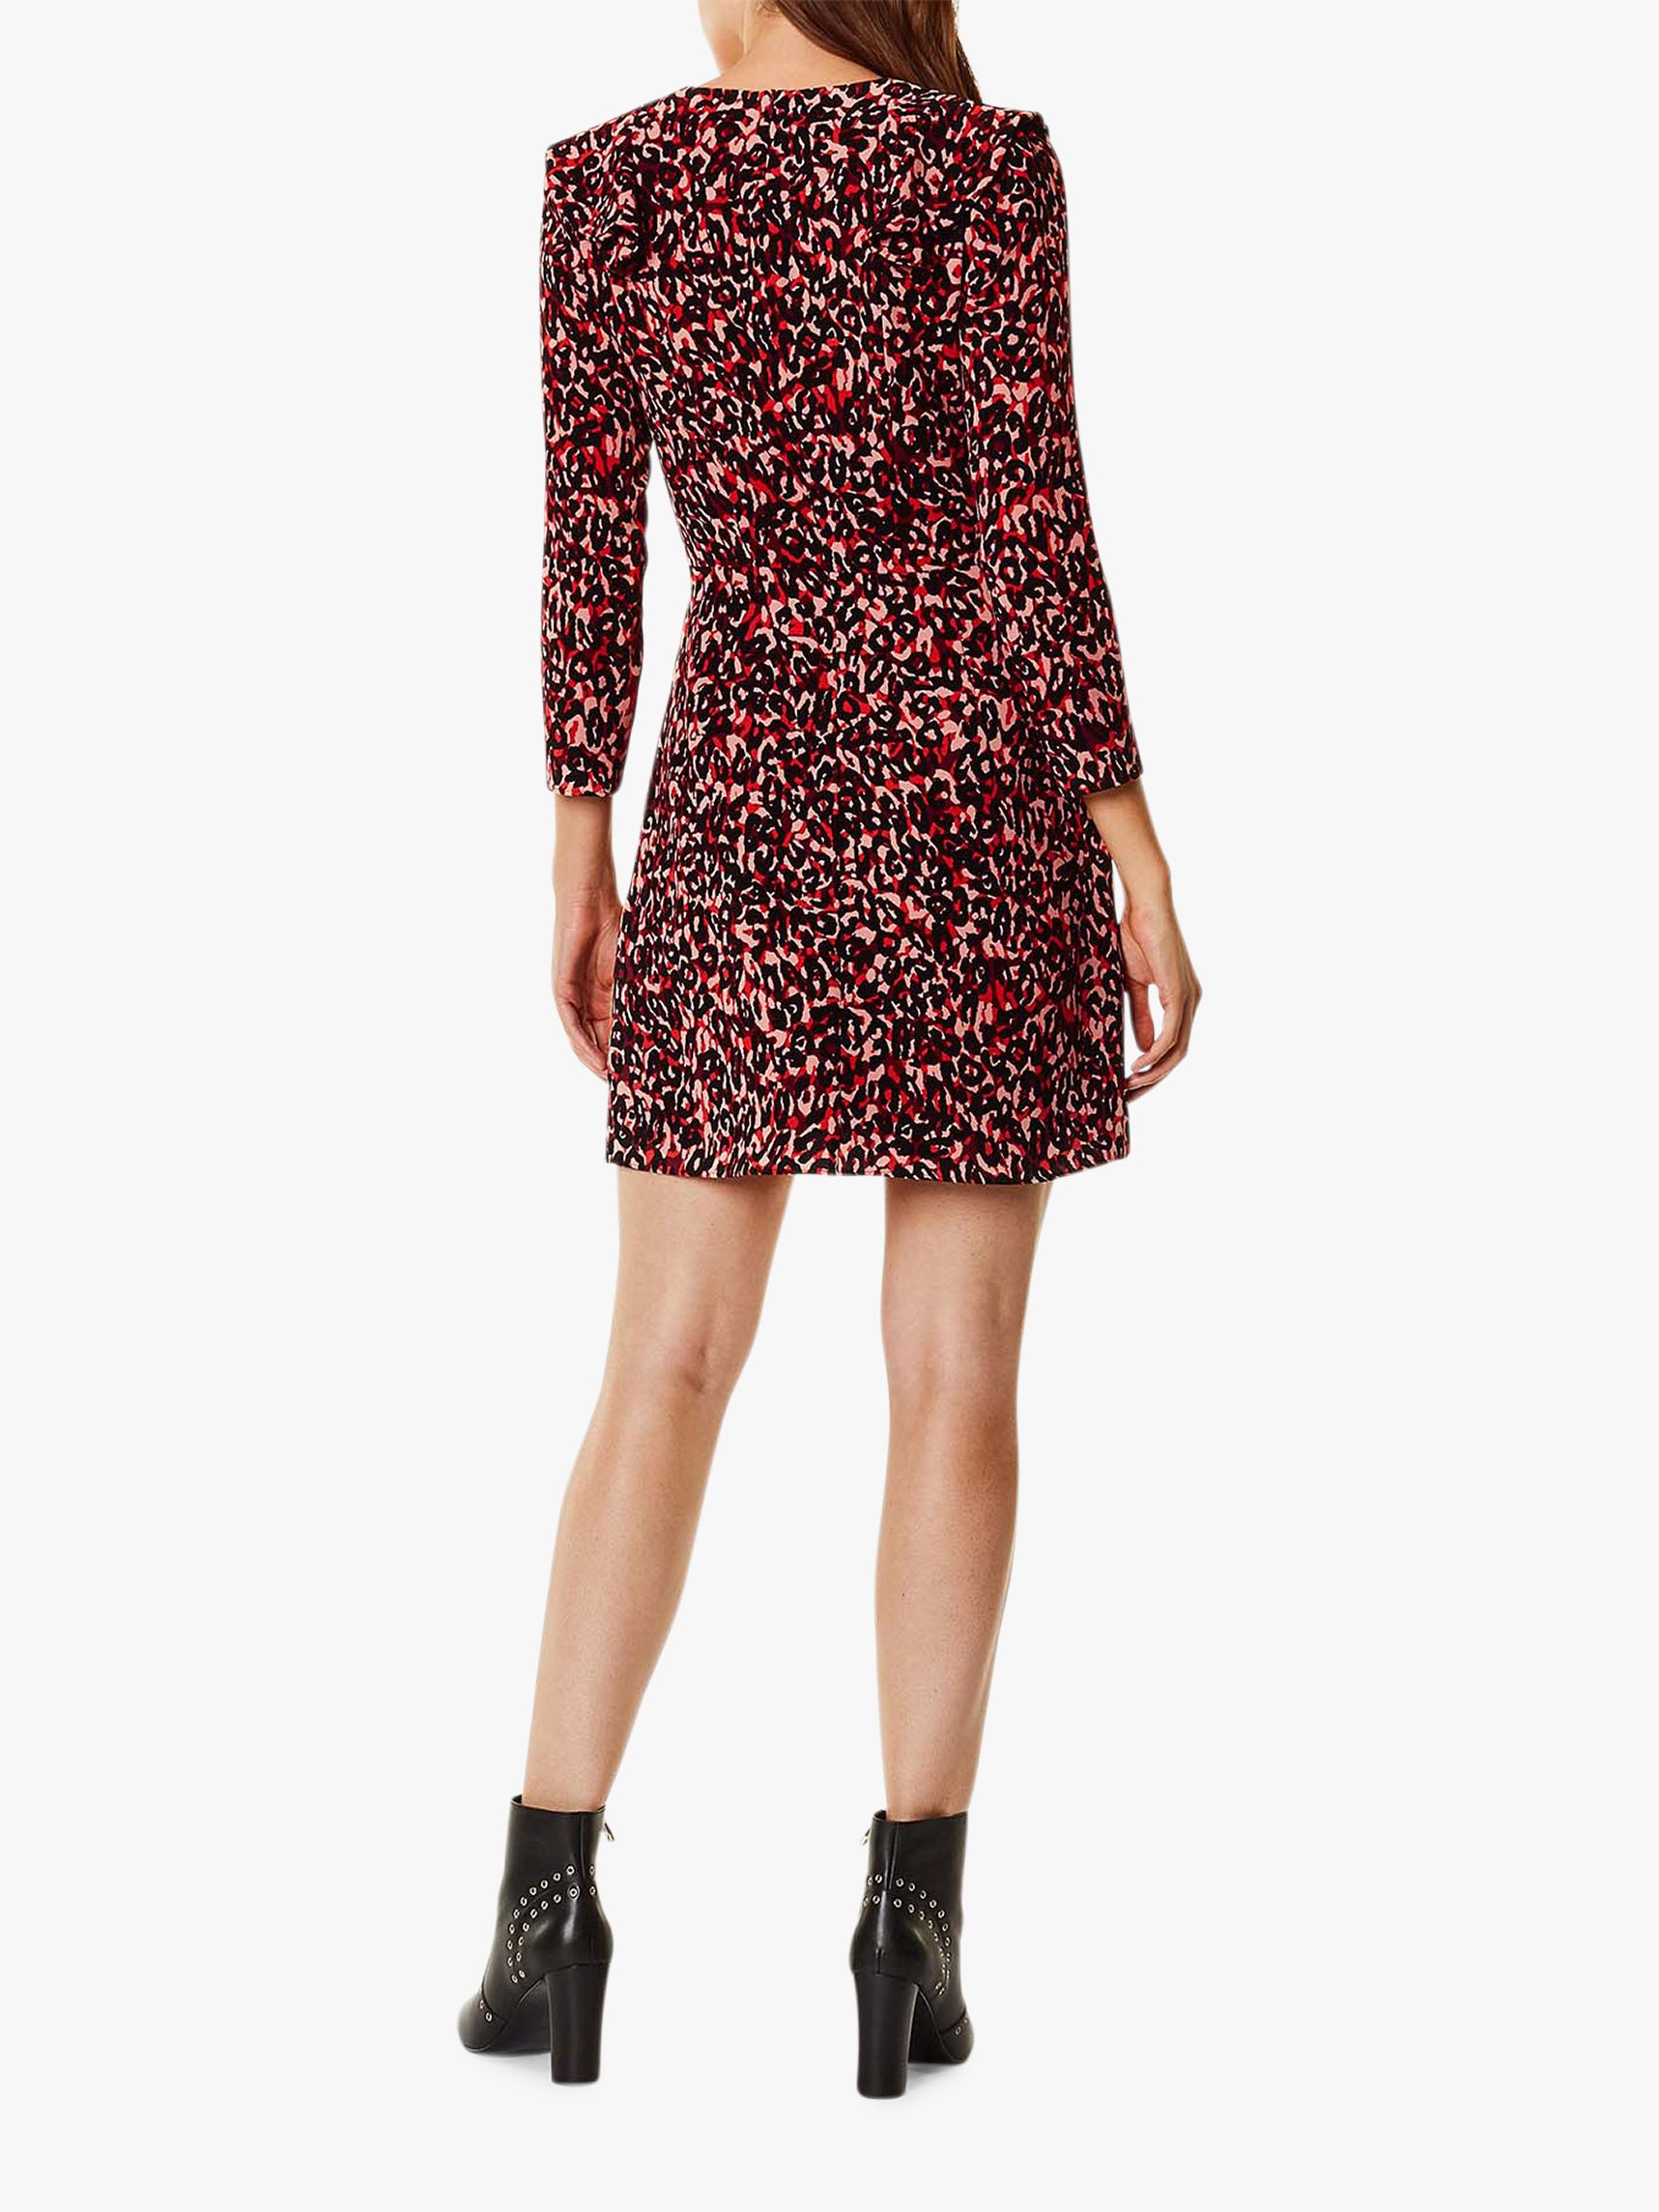 Karen Millen Leopard Print Mini Dress, Multi at John Lewis & Partners